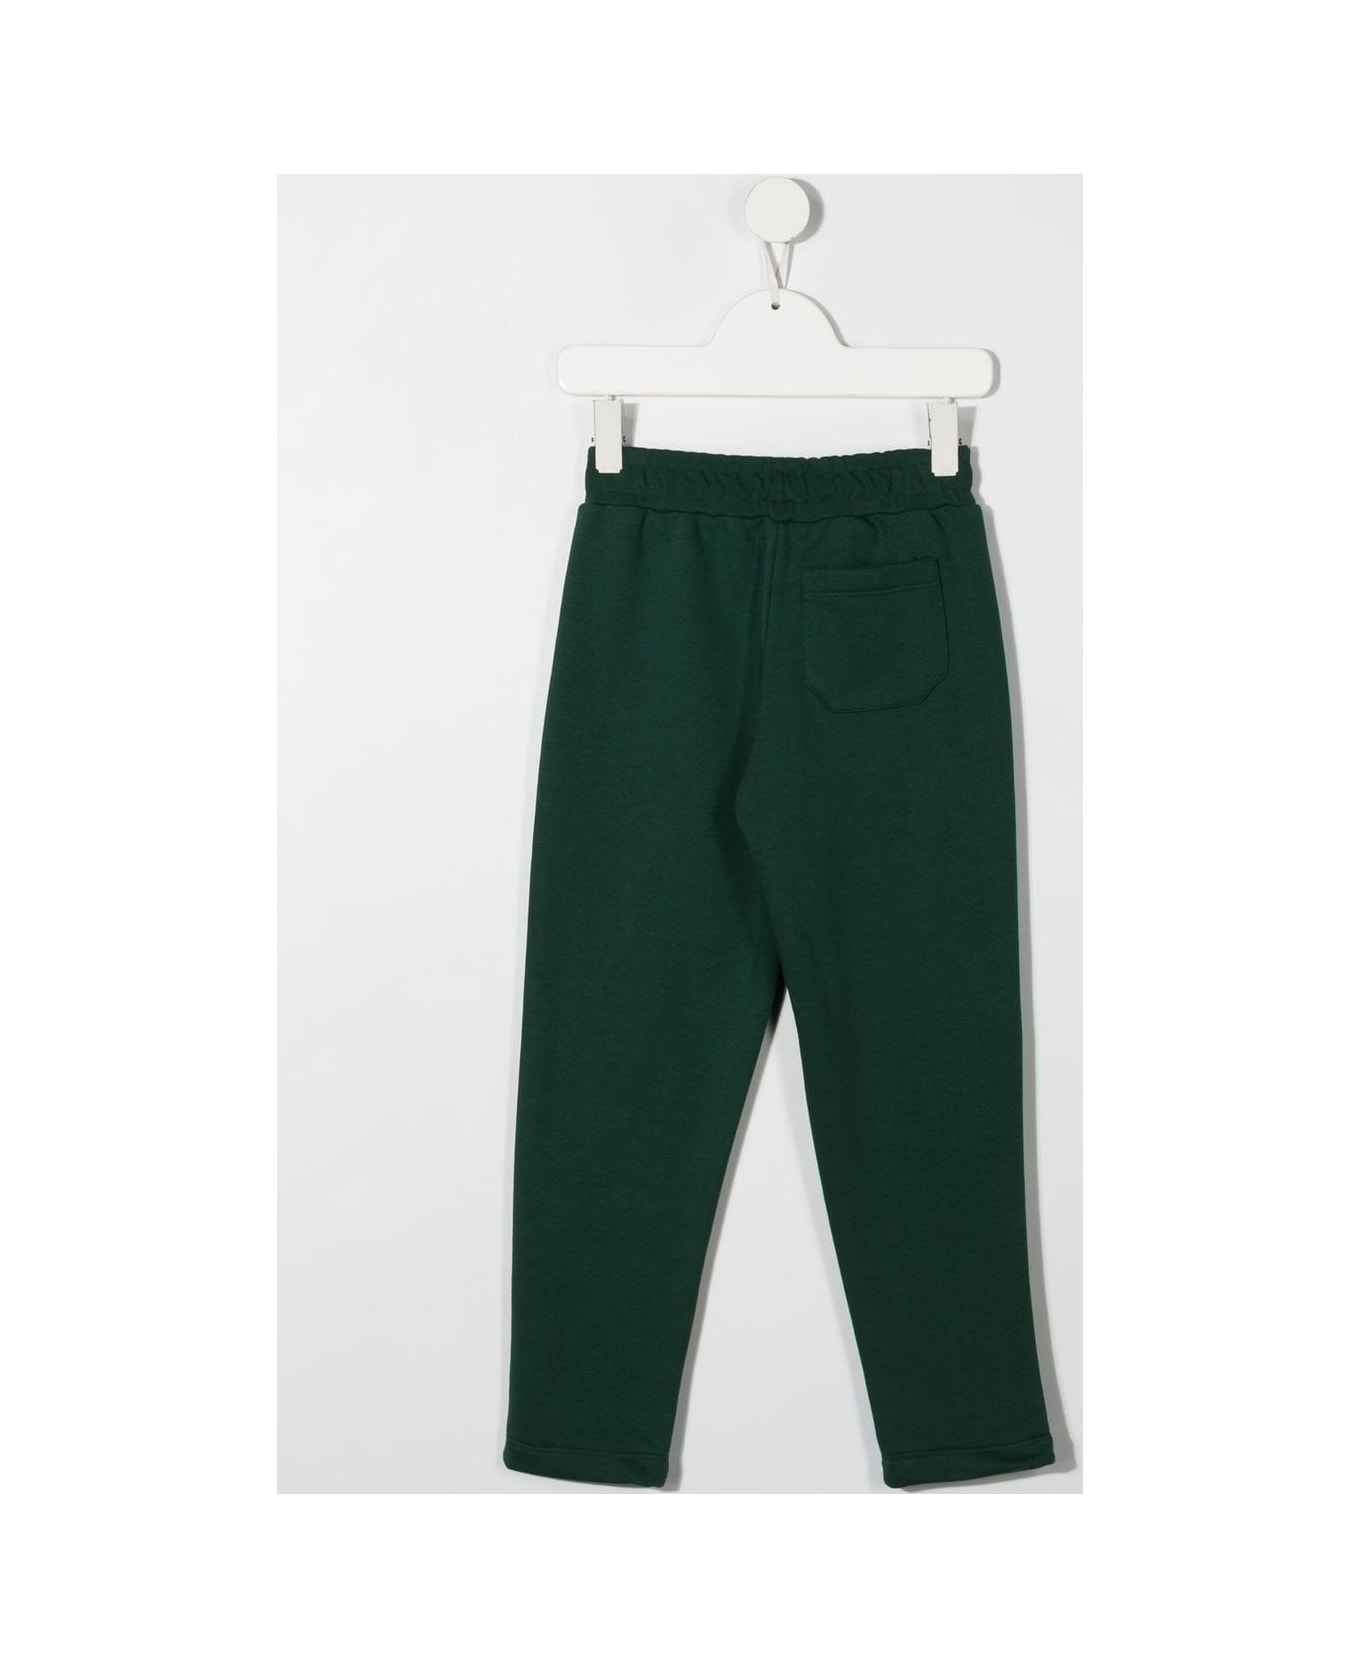 Golden Goose Green Cotton Track Pants - Verde